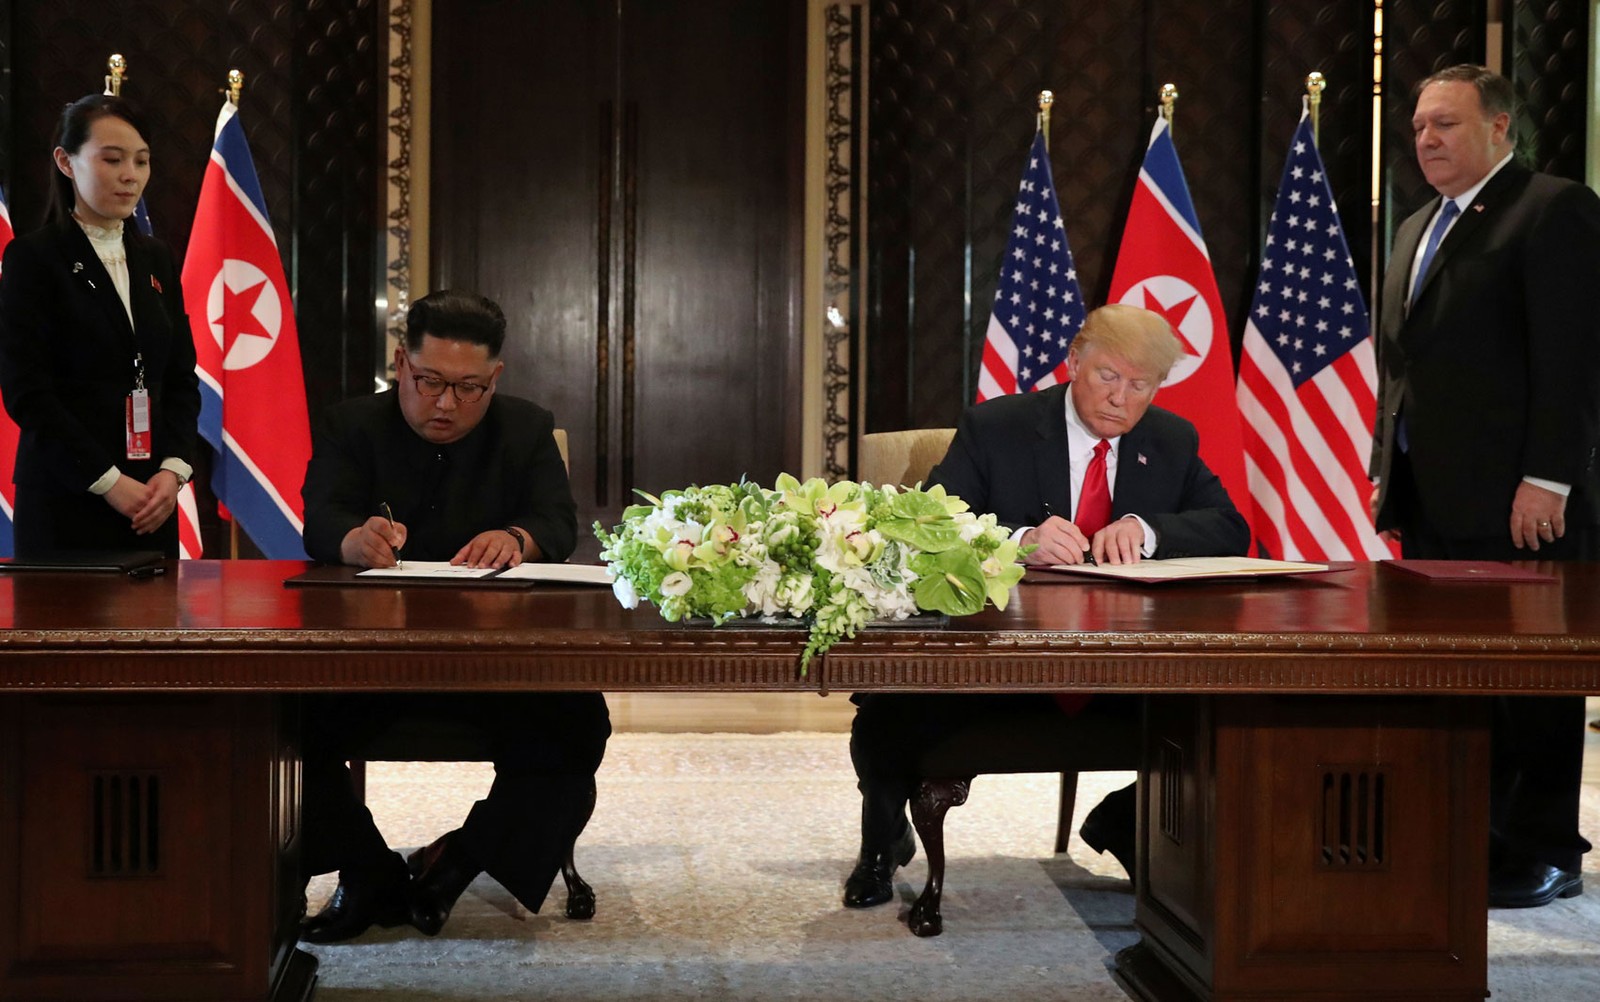 Donald Trump e Kim Jong-un assinam acordo histórico